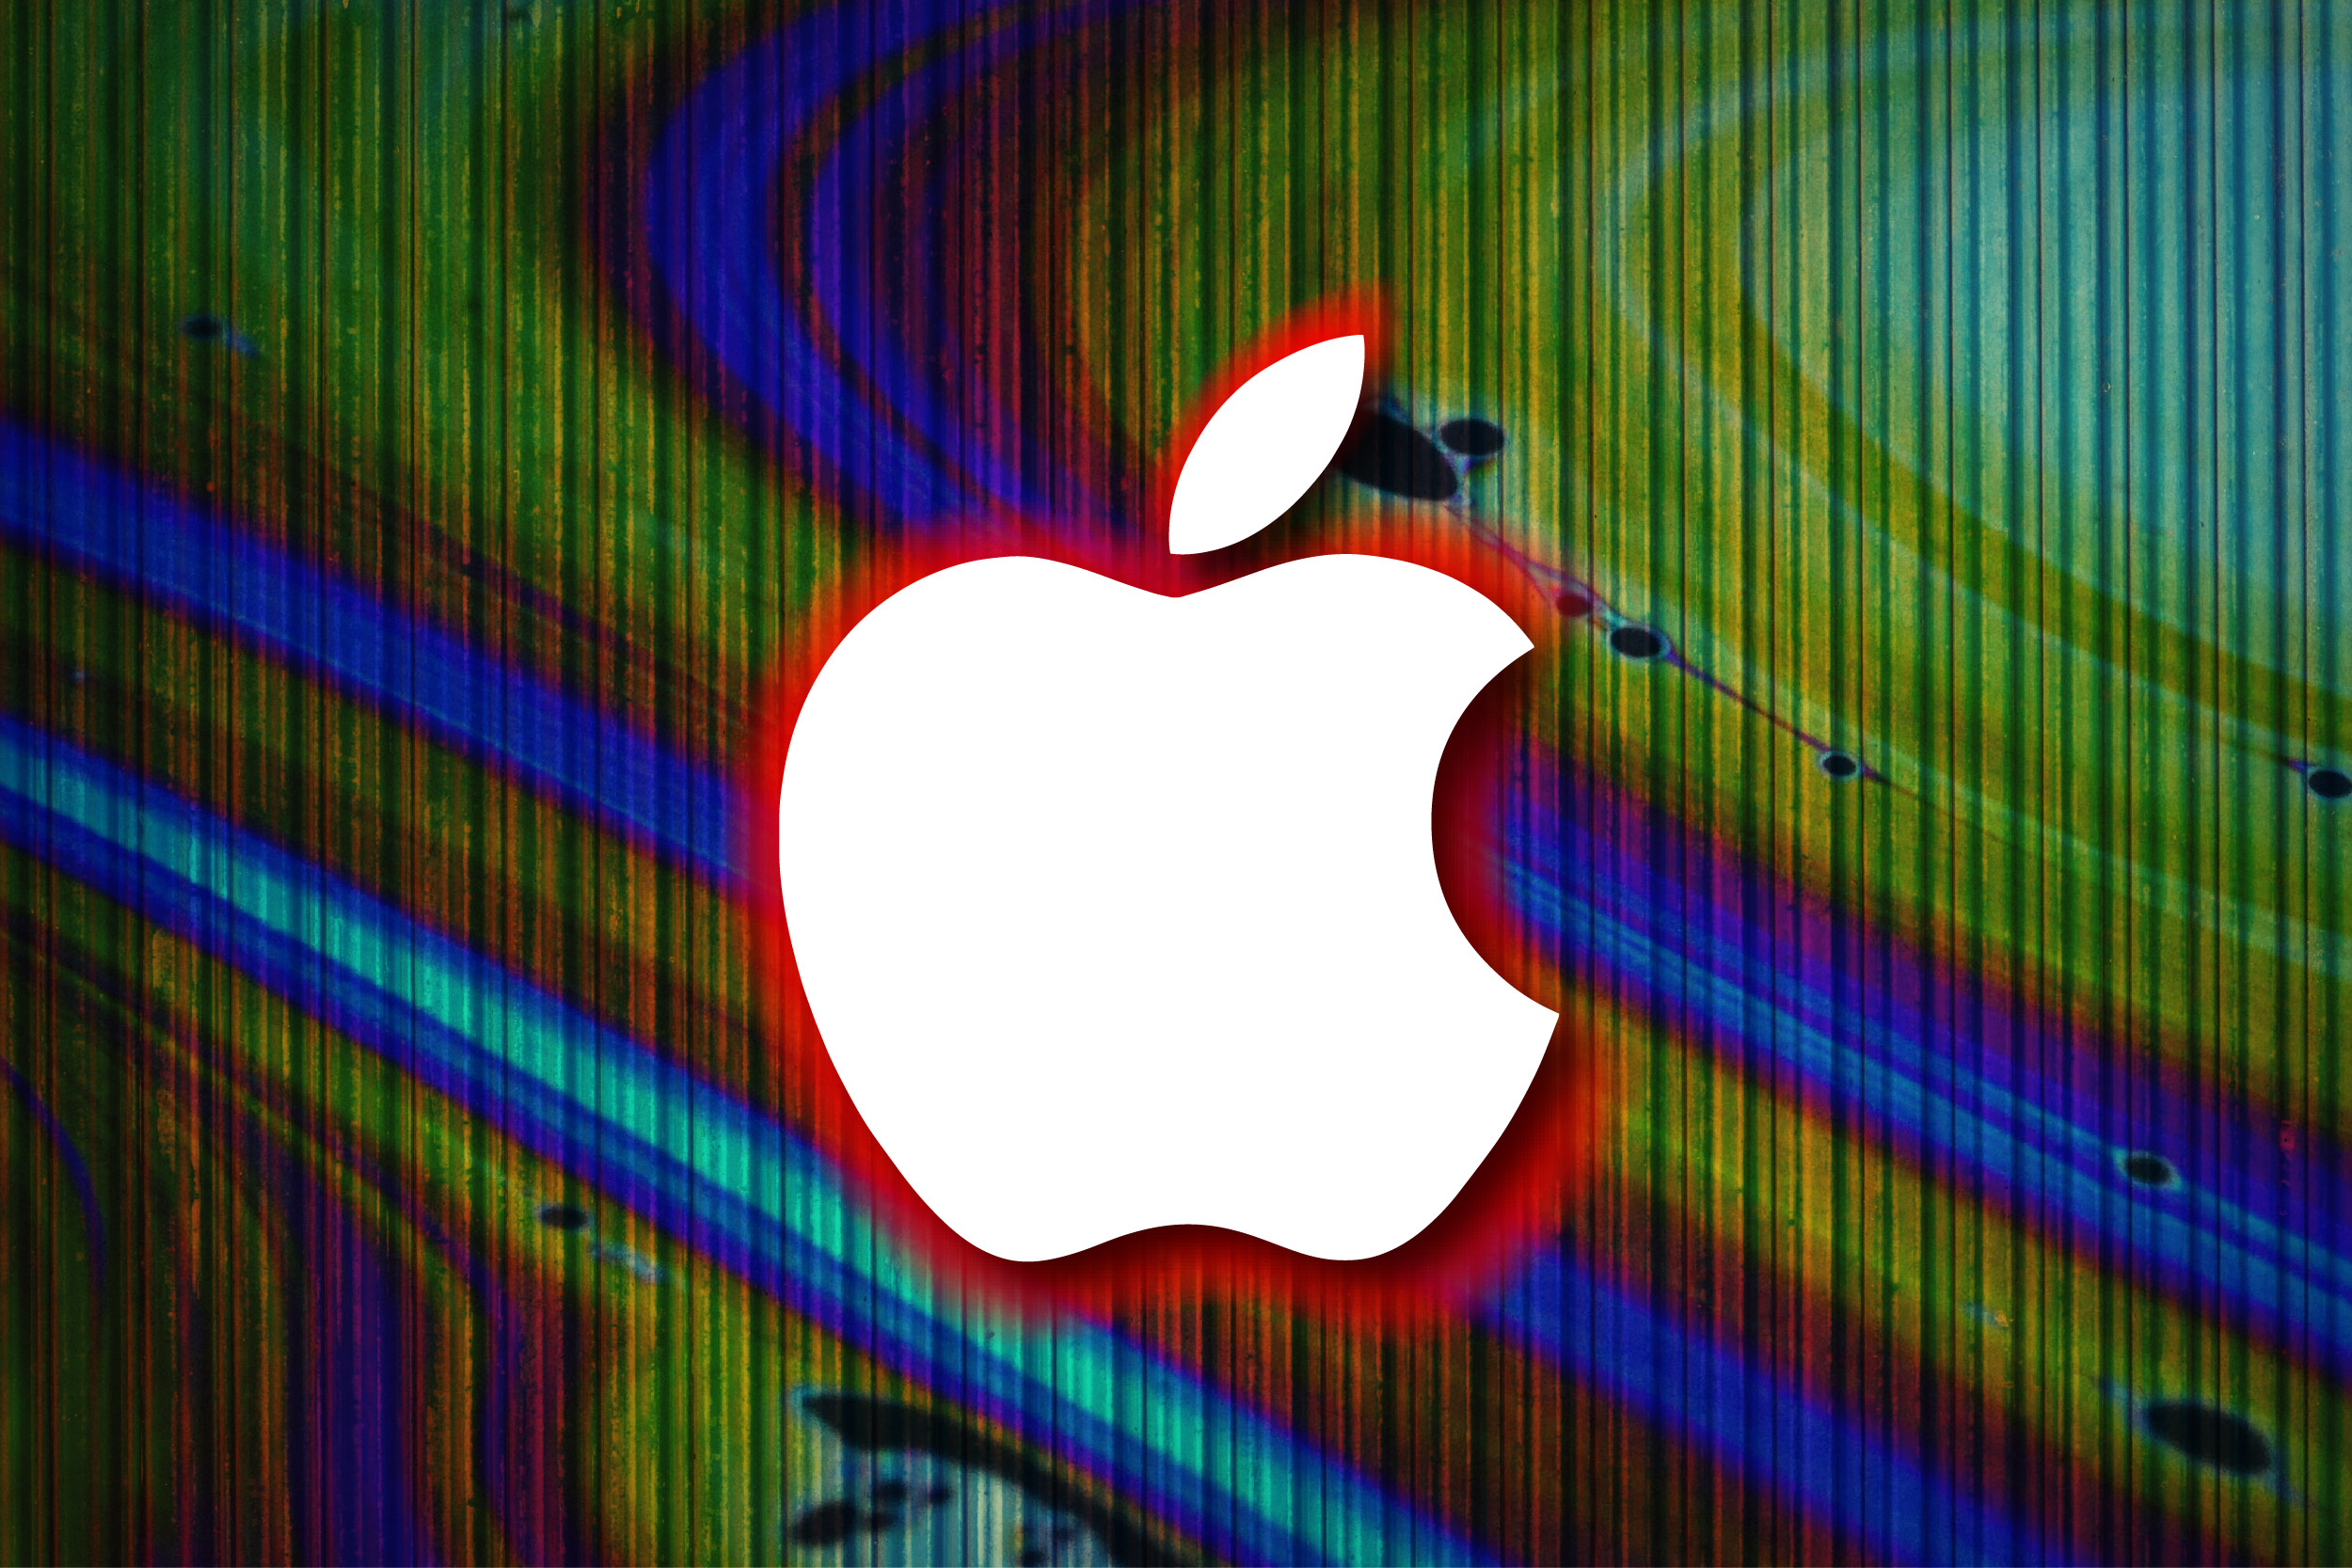 Apple blundered when it killed off Dark Sky